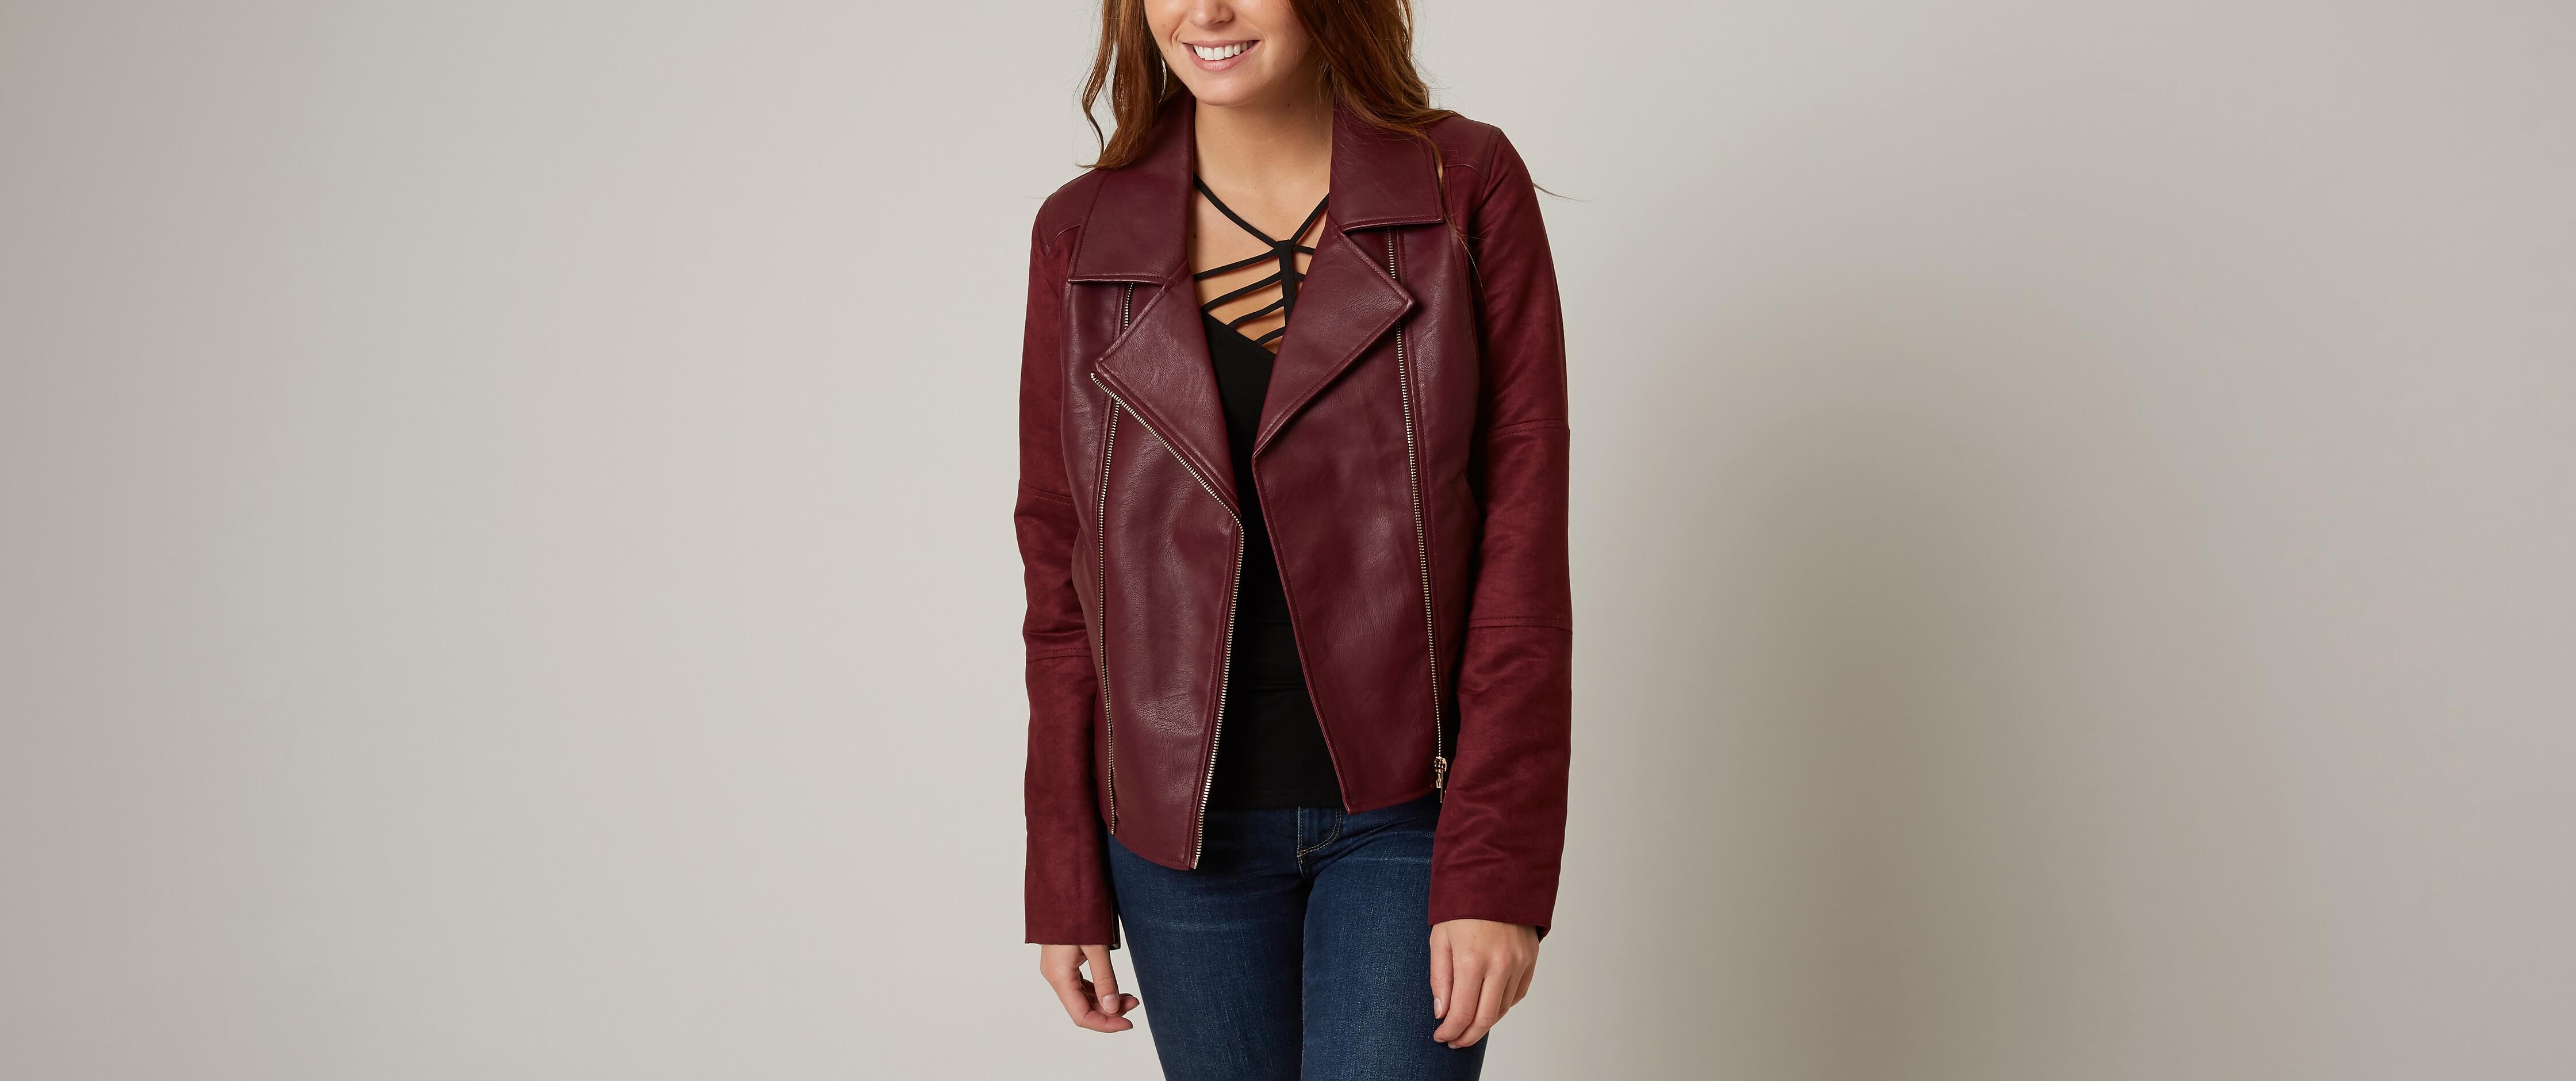 windsor leather jacket